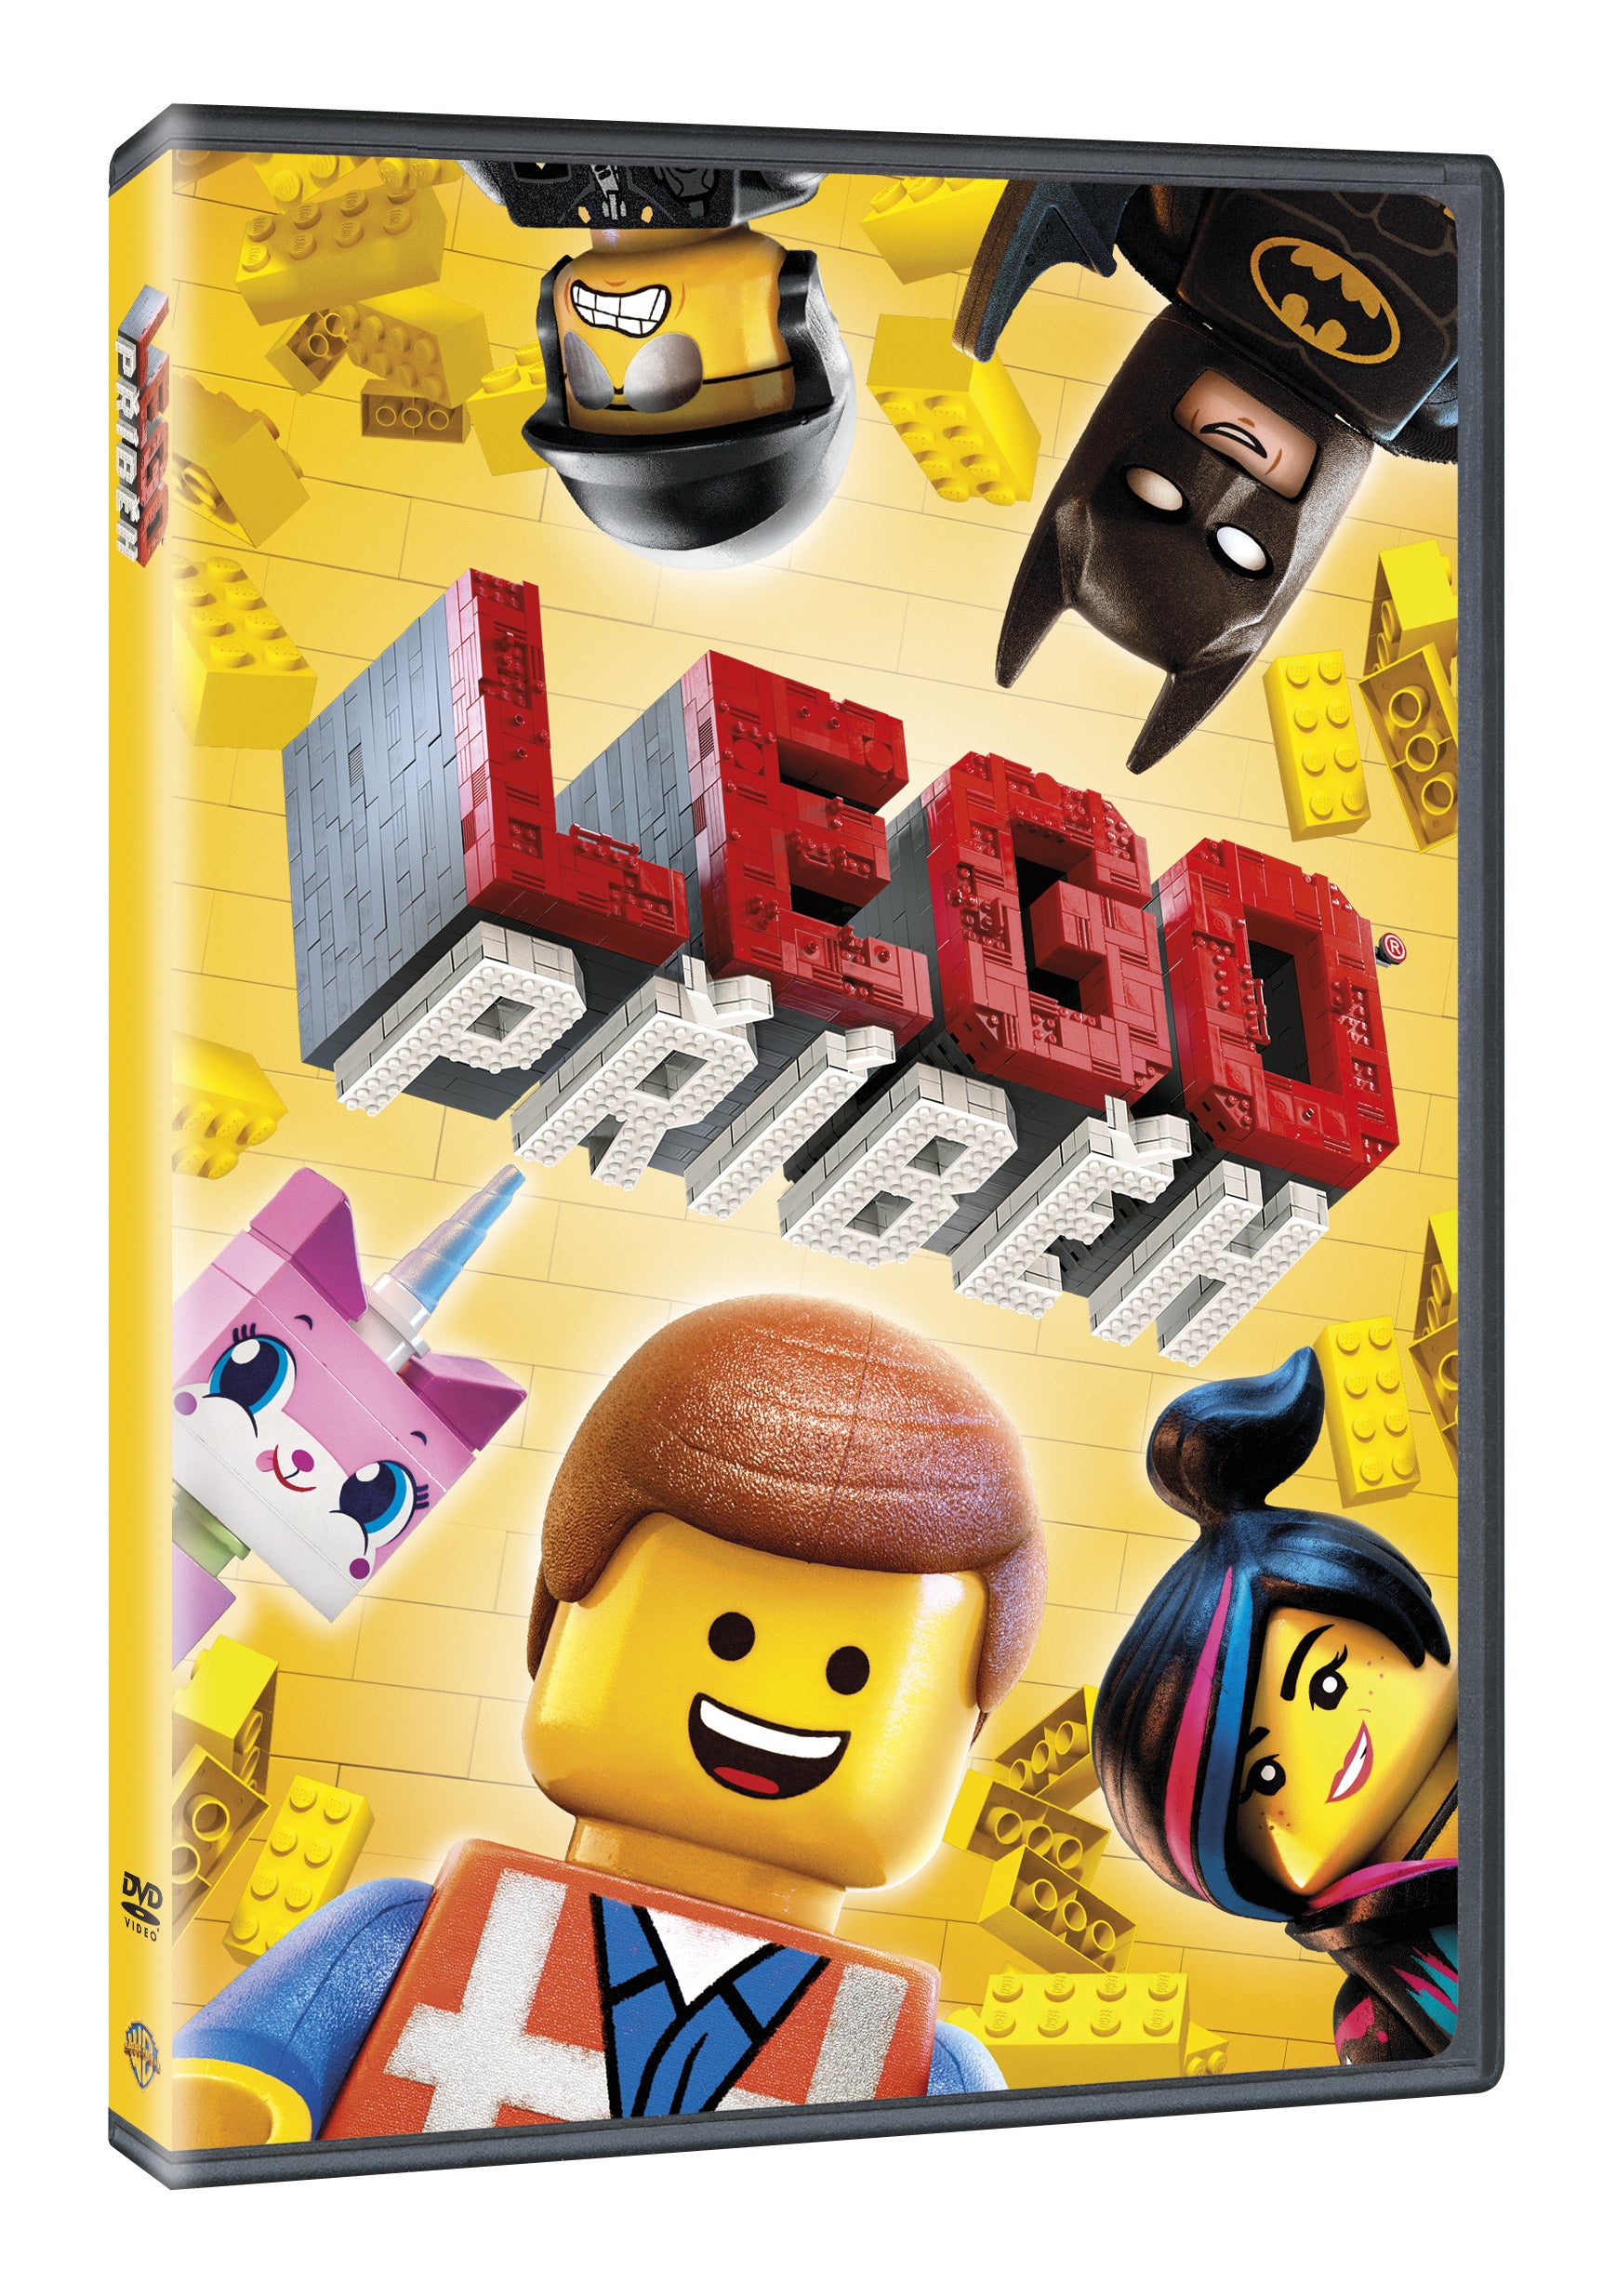 Lego pribeh DVD / The Lego Movie